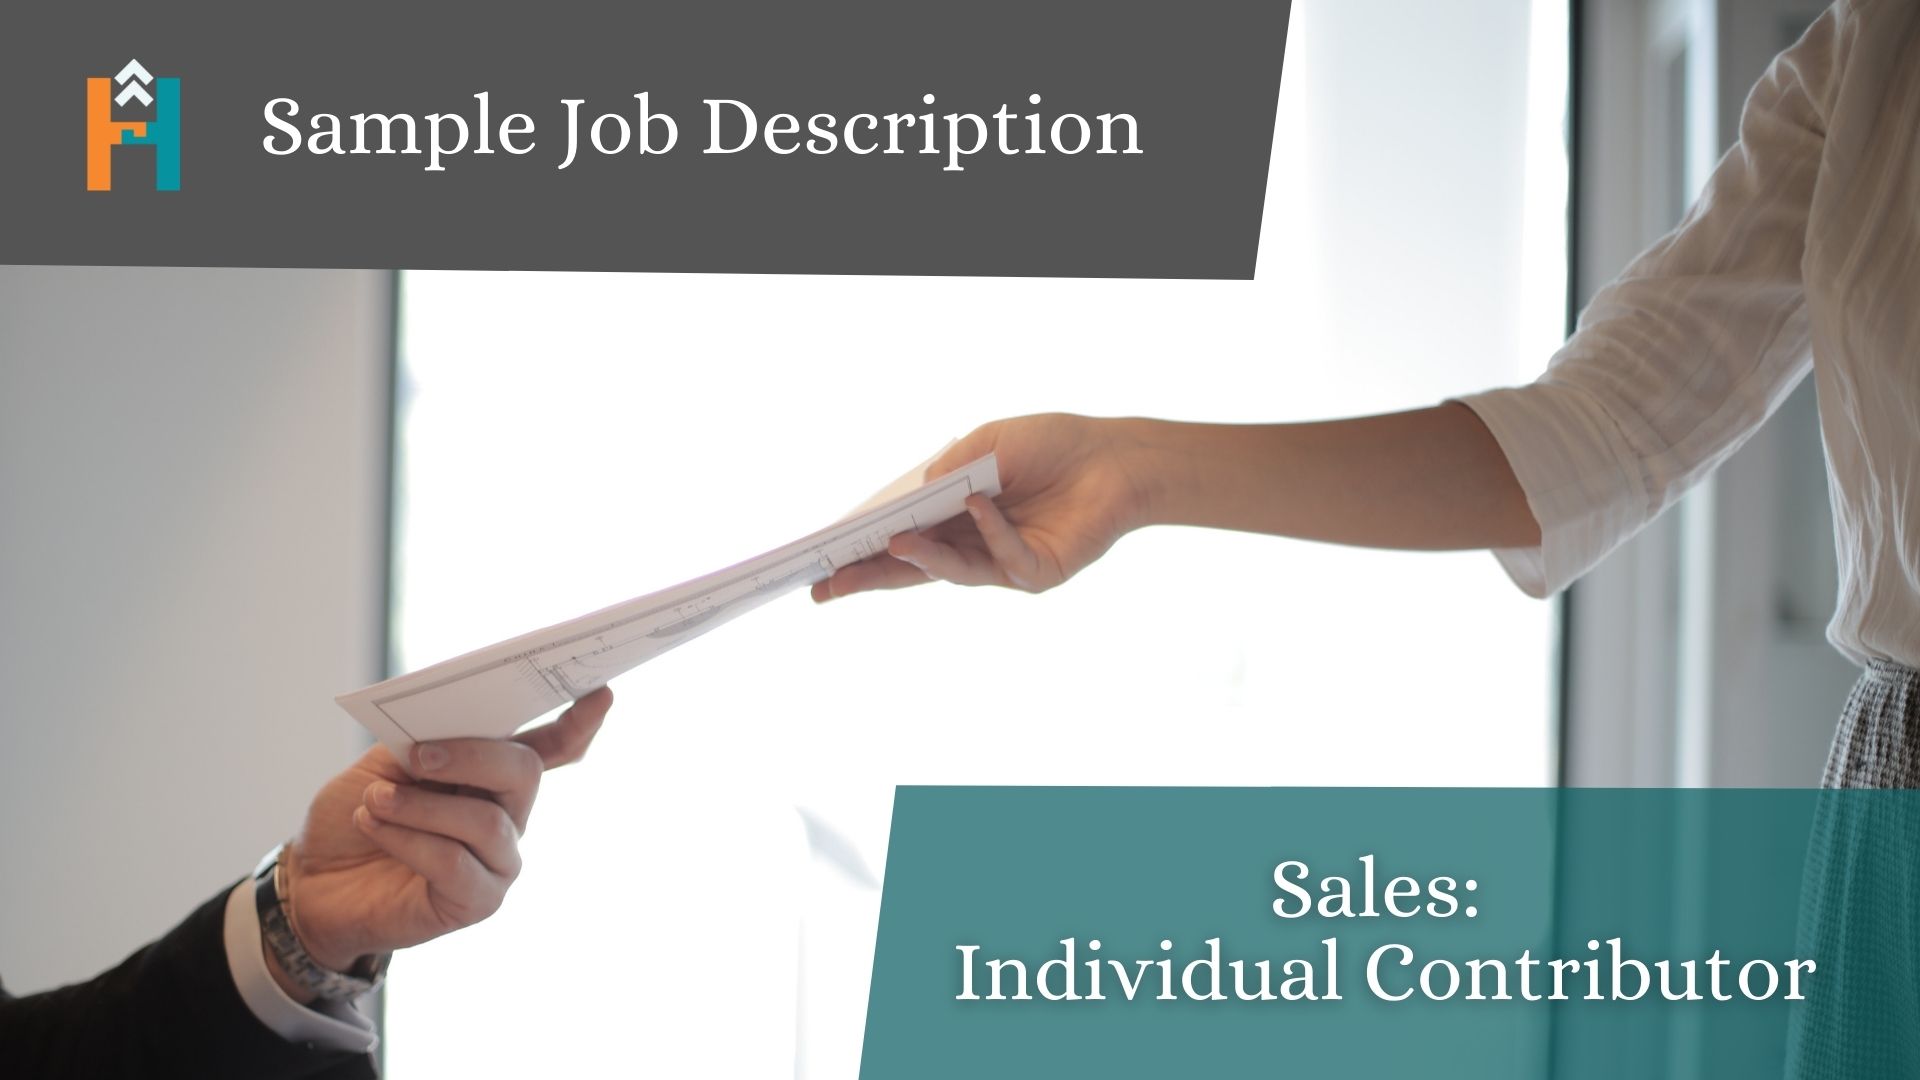 Sample Job Description - Sales Individual Contributor